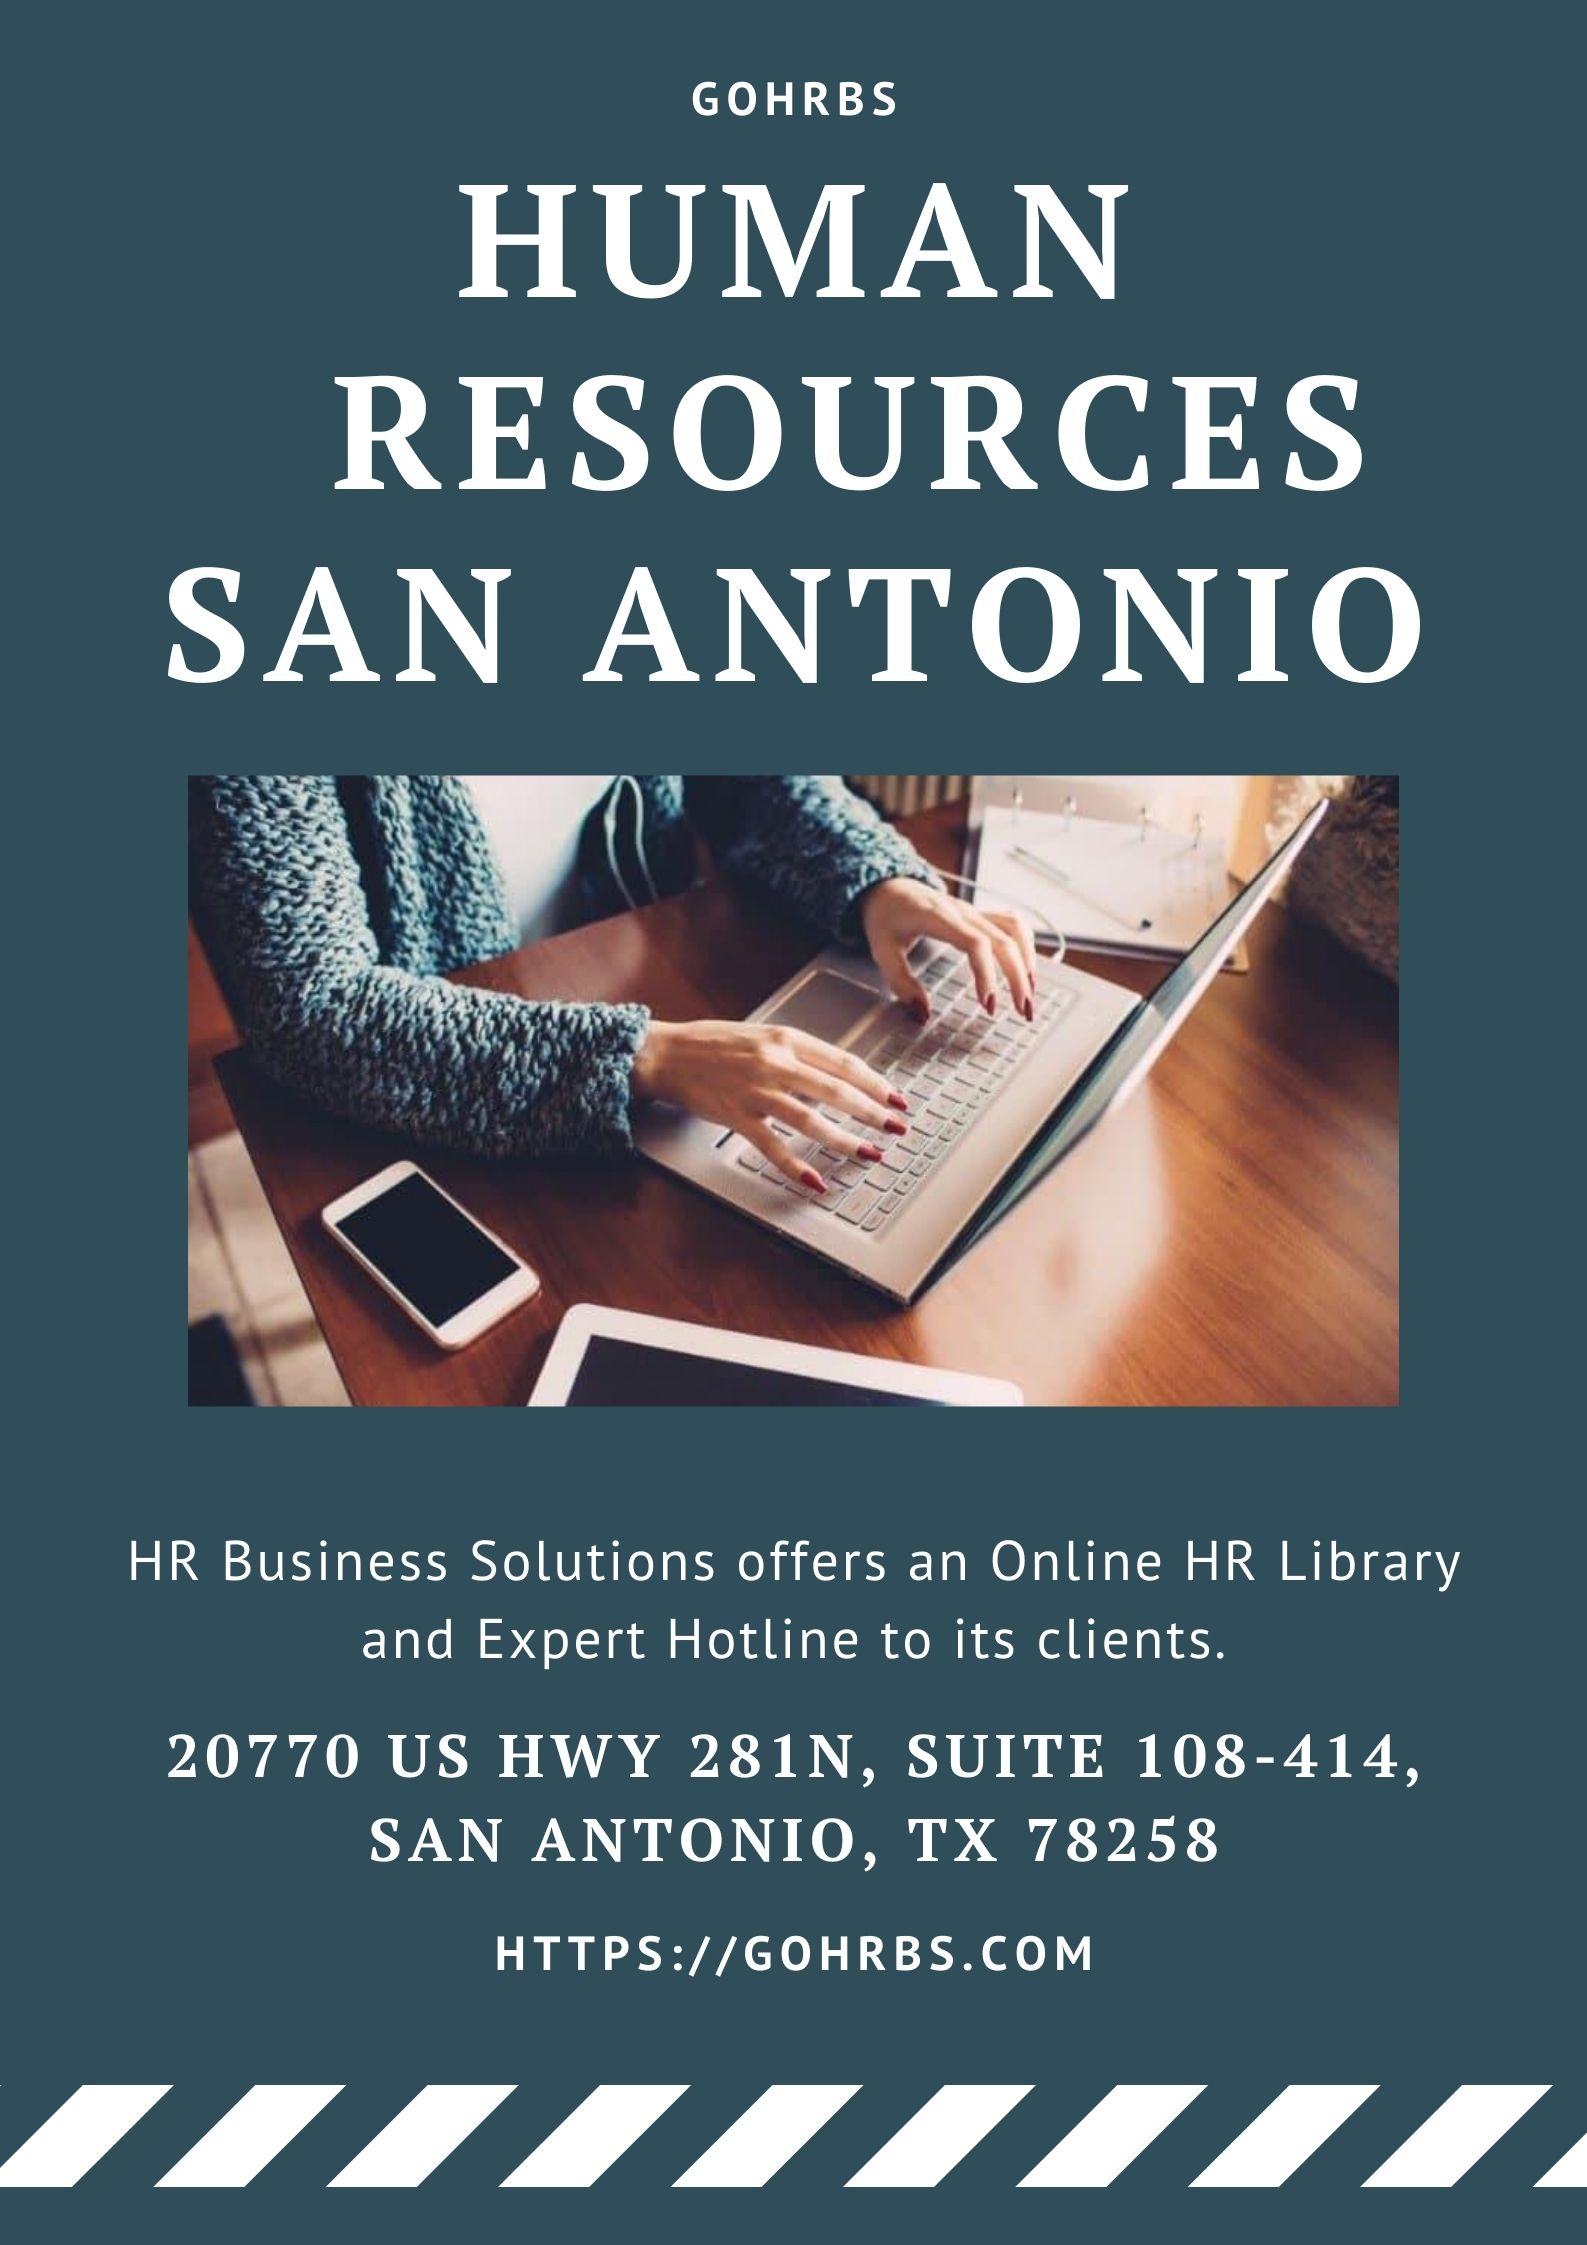 Human Resources San Antonio - Gohrbs.jpg  by gohrbusinesssolutions